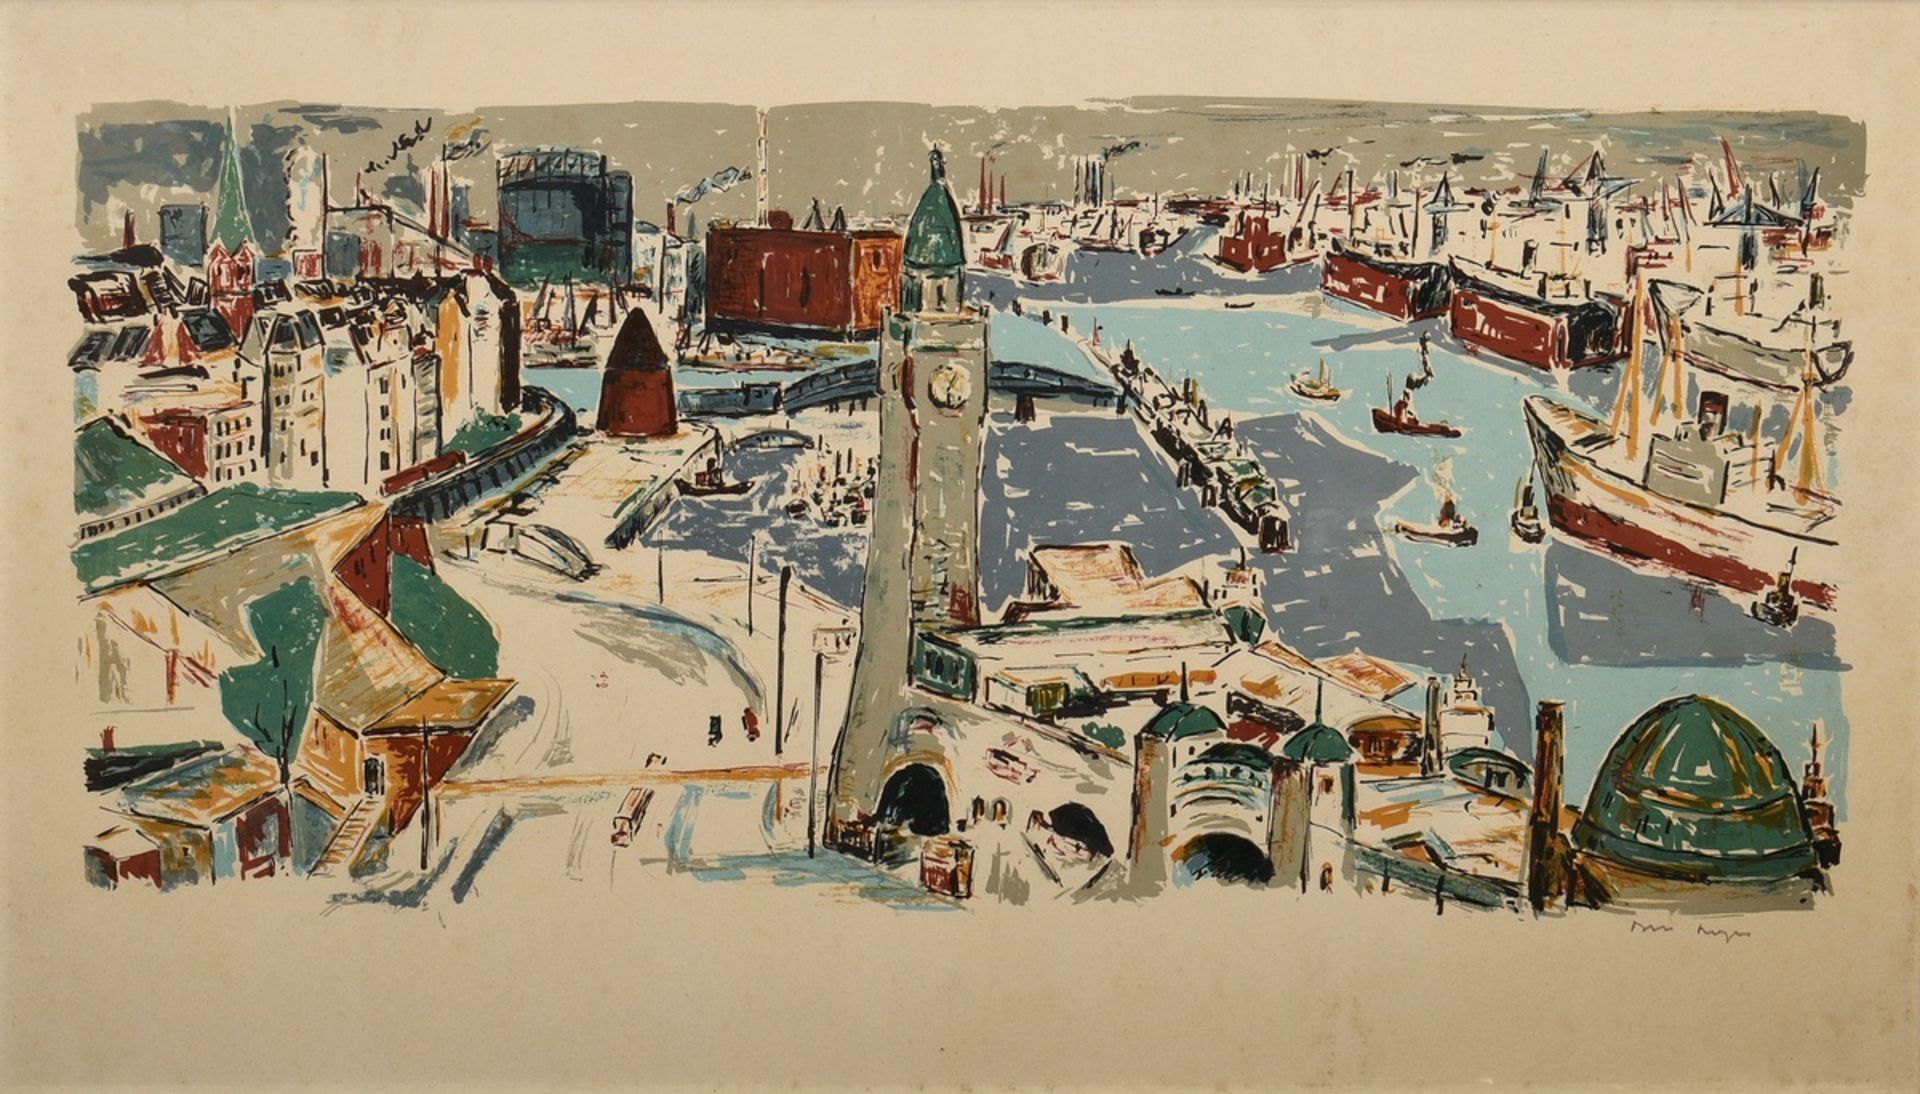 Hops, Tom (1906-1976) "Hamburg Harbour", colour lithograph, sign. b.r., verso adhesive label "Kunst